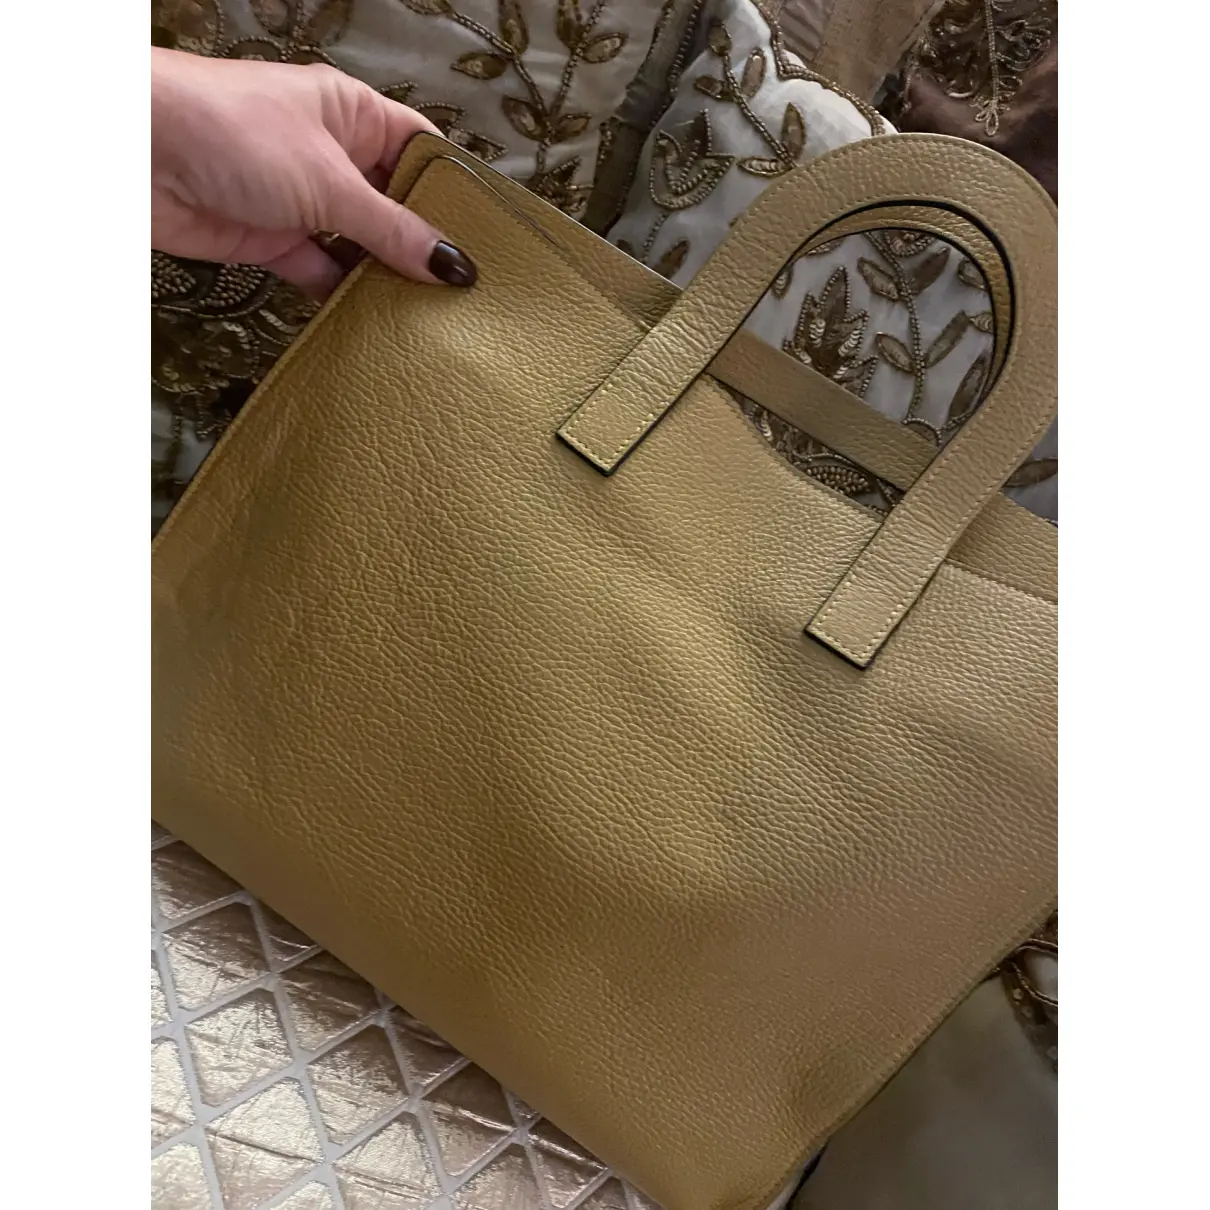 Buy avenue 67 Leather handbag online